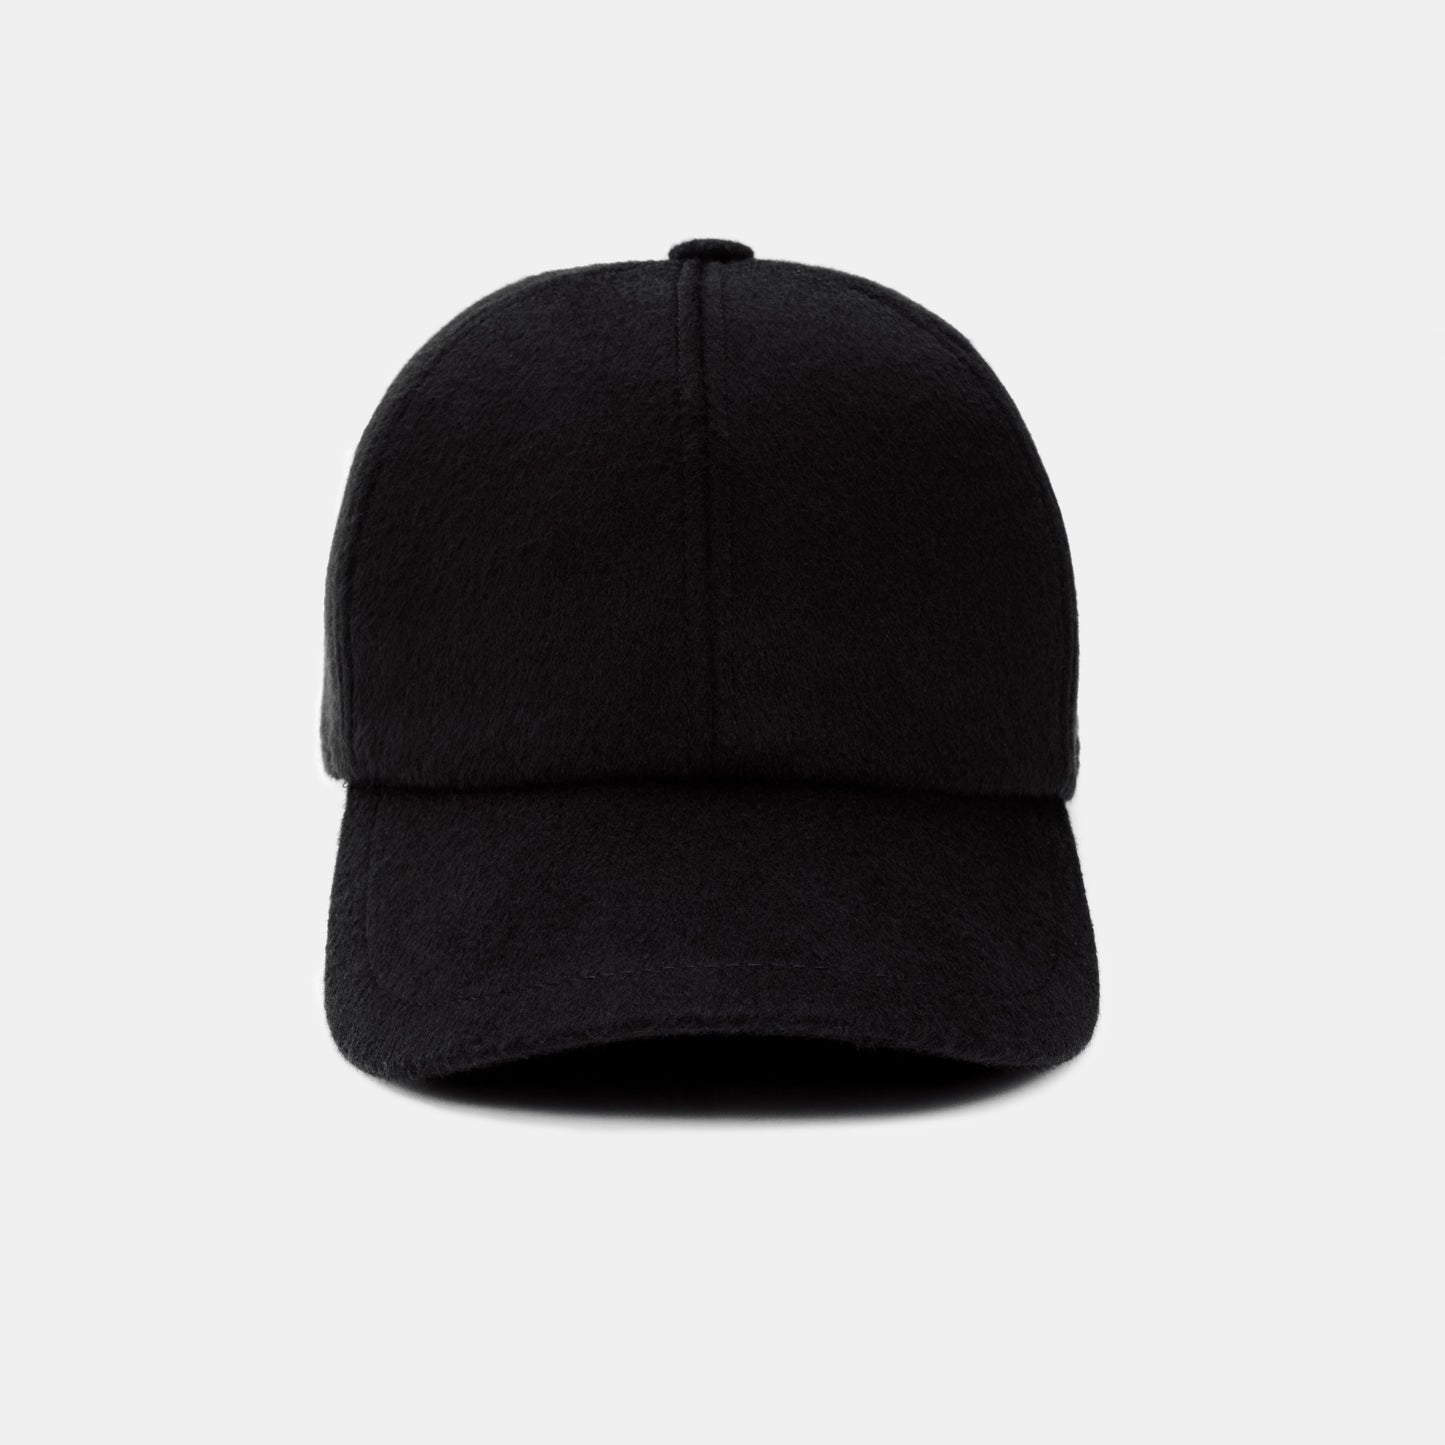 N33 BASEBALL CAP 100% cashmere cap made in Italy luxury baseball cap black loro piana cashmere, unisex, high quality handmade cap artisan-made hat